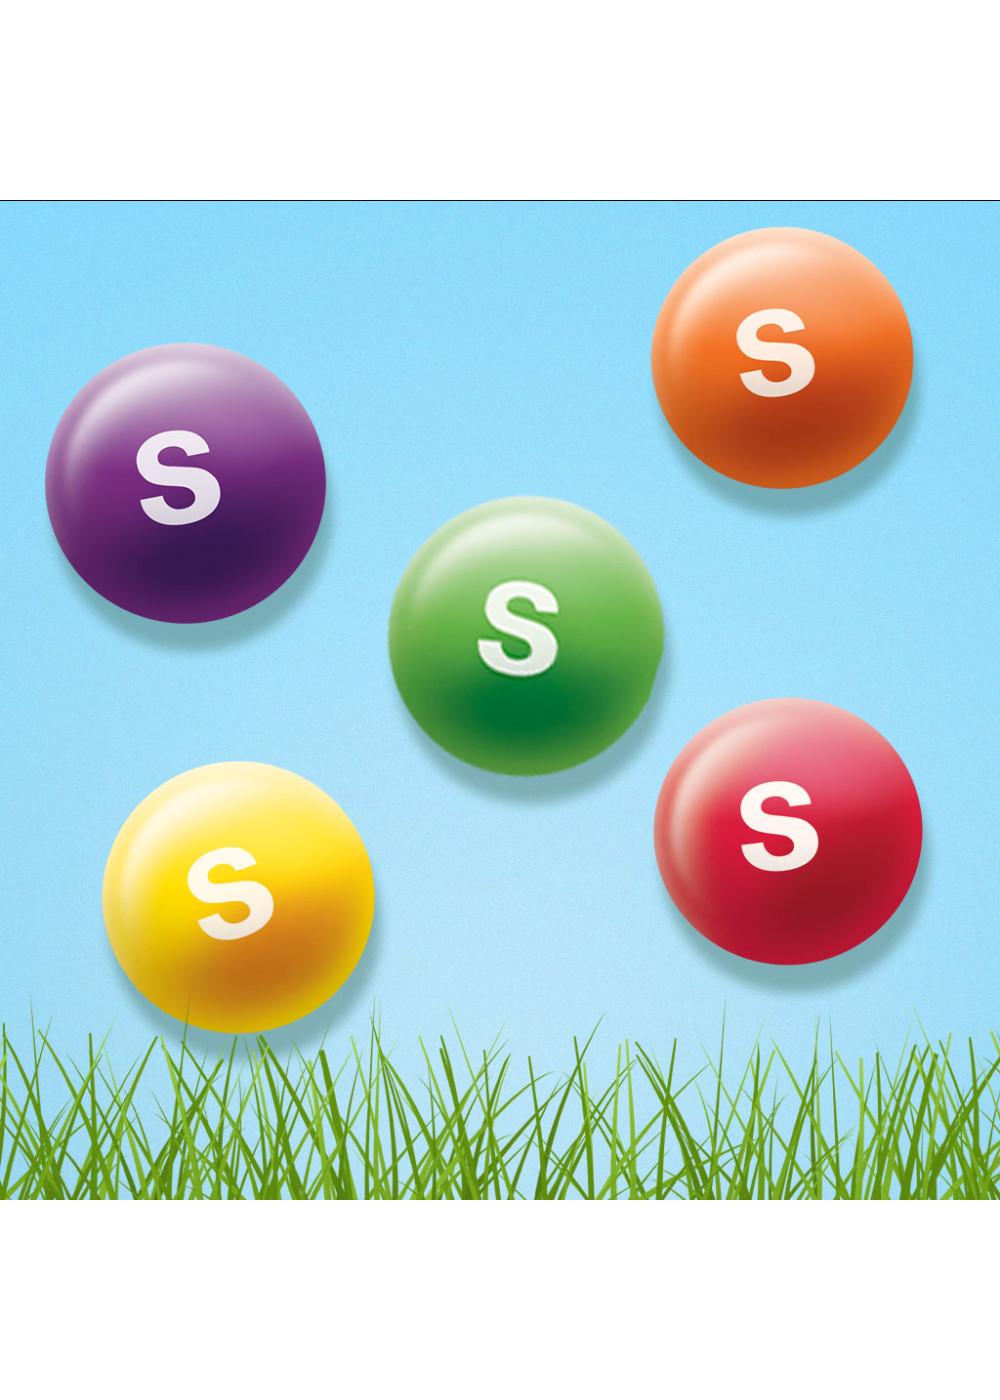 Skittles Original Candy Easter Egg; image 7 of 7